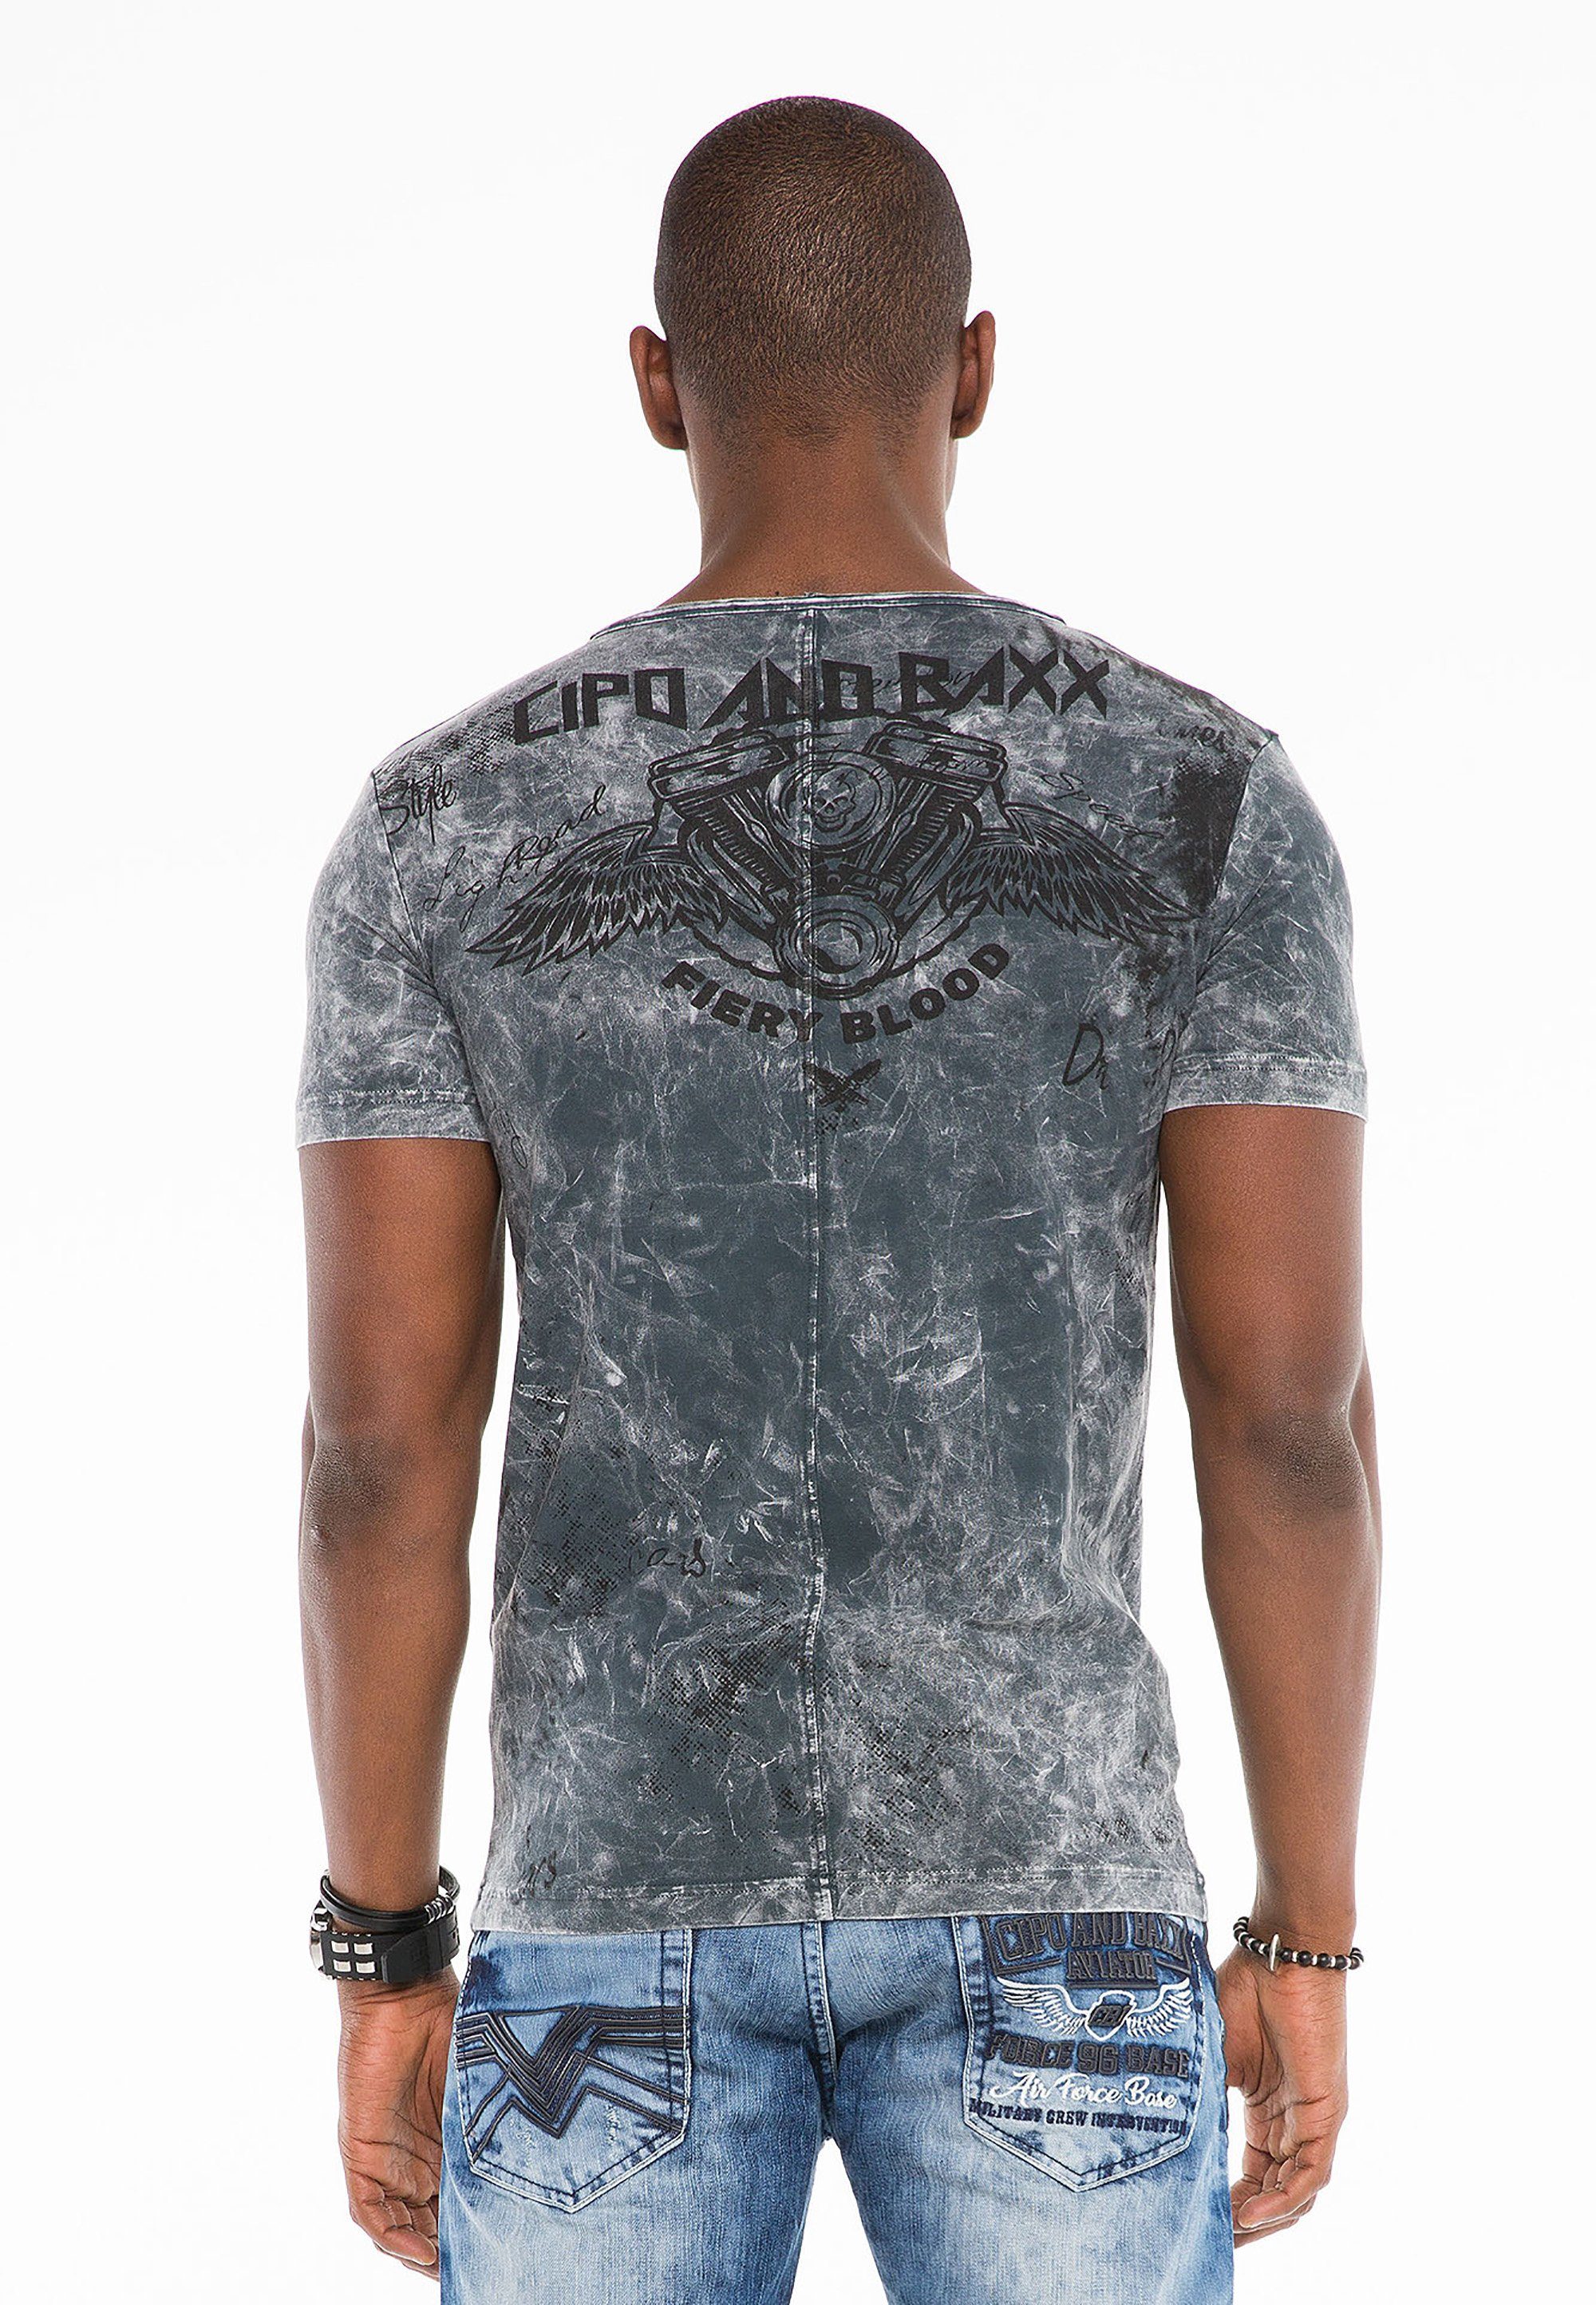 & Style Cipo Henley im grau-mehrfarbig T-Shirt Baxx